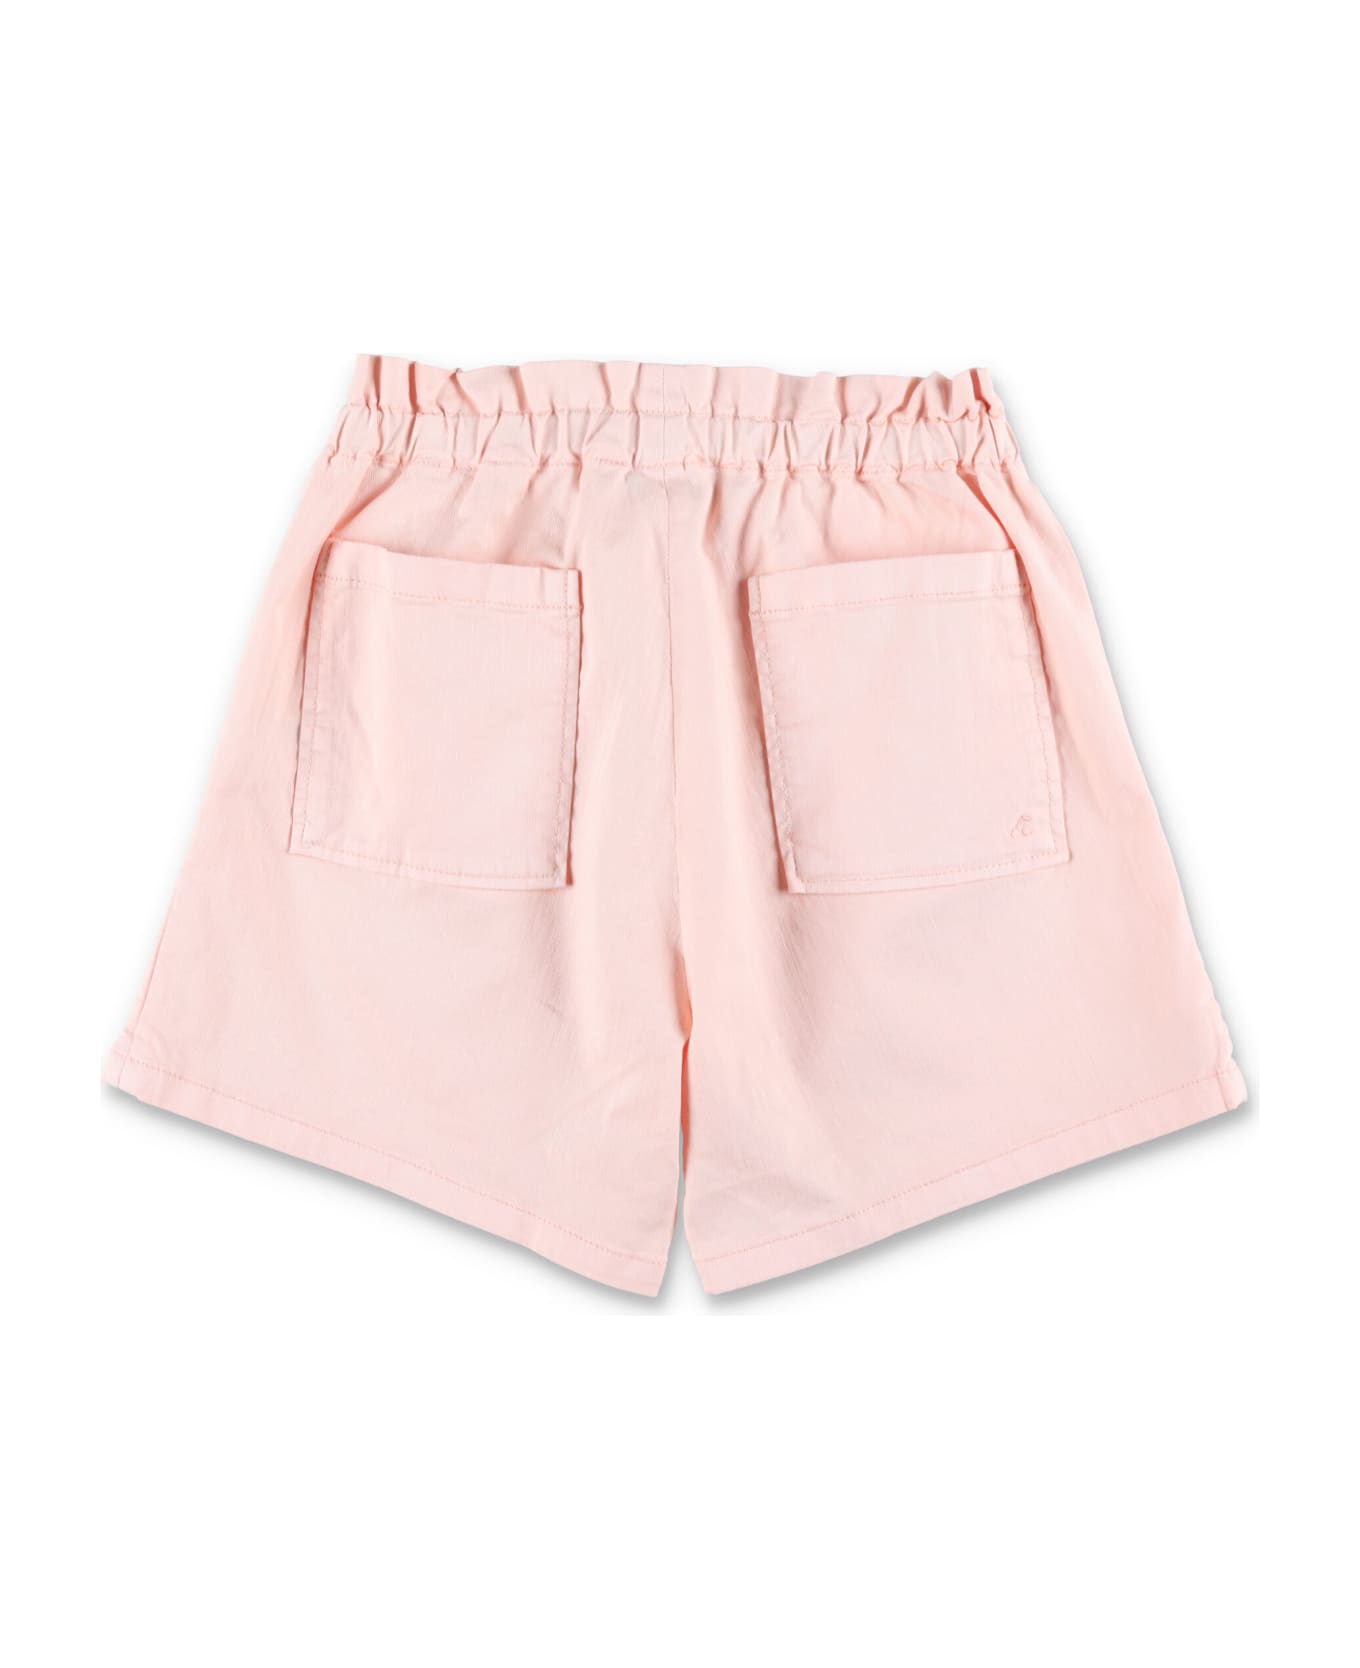 Bonpoint Milly Shorts - ROSE